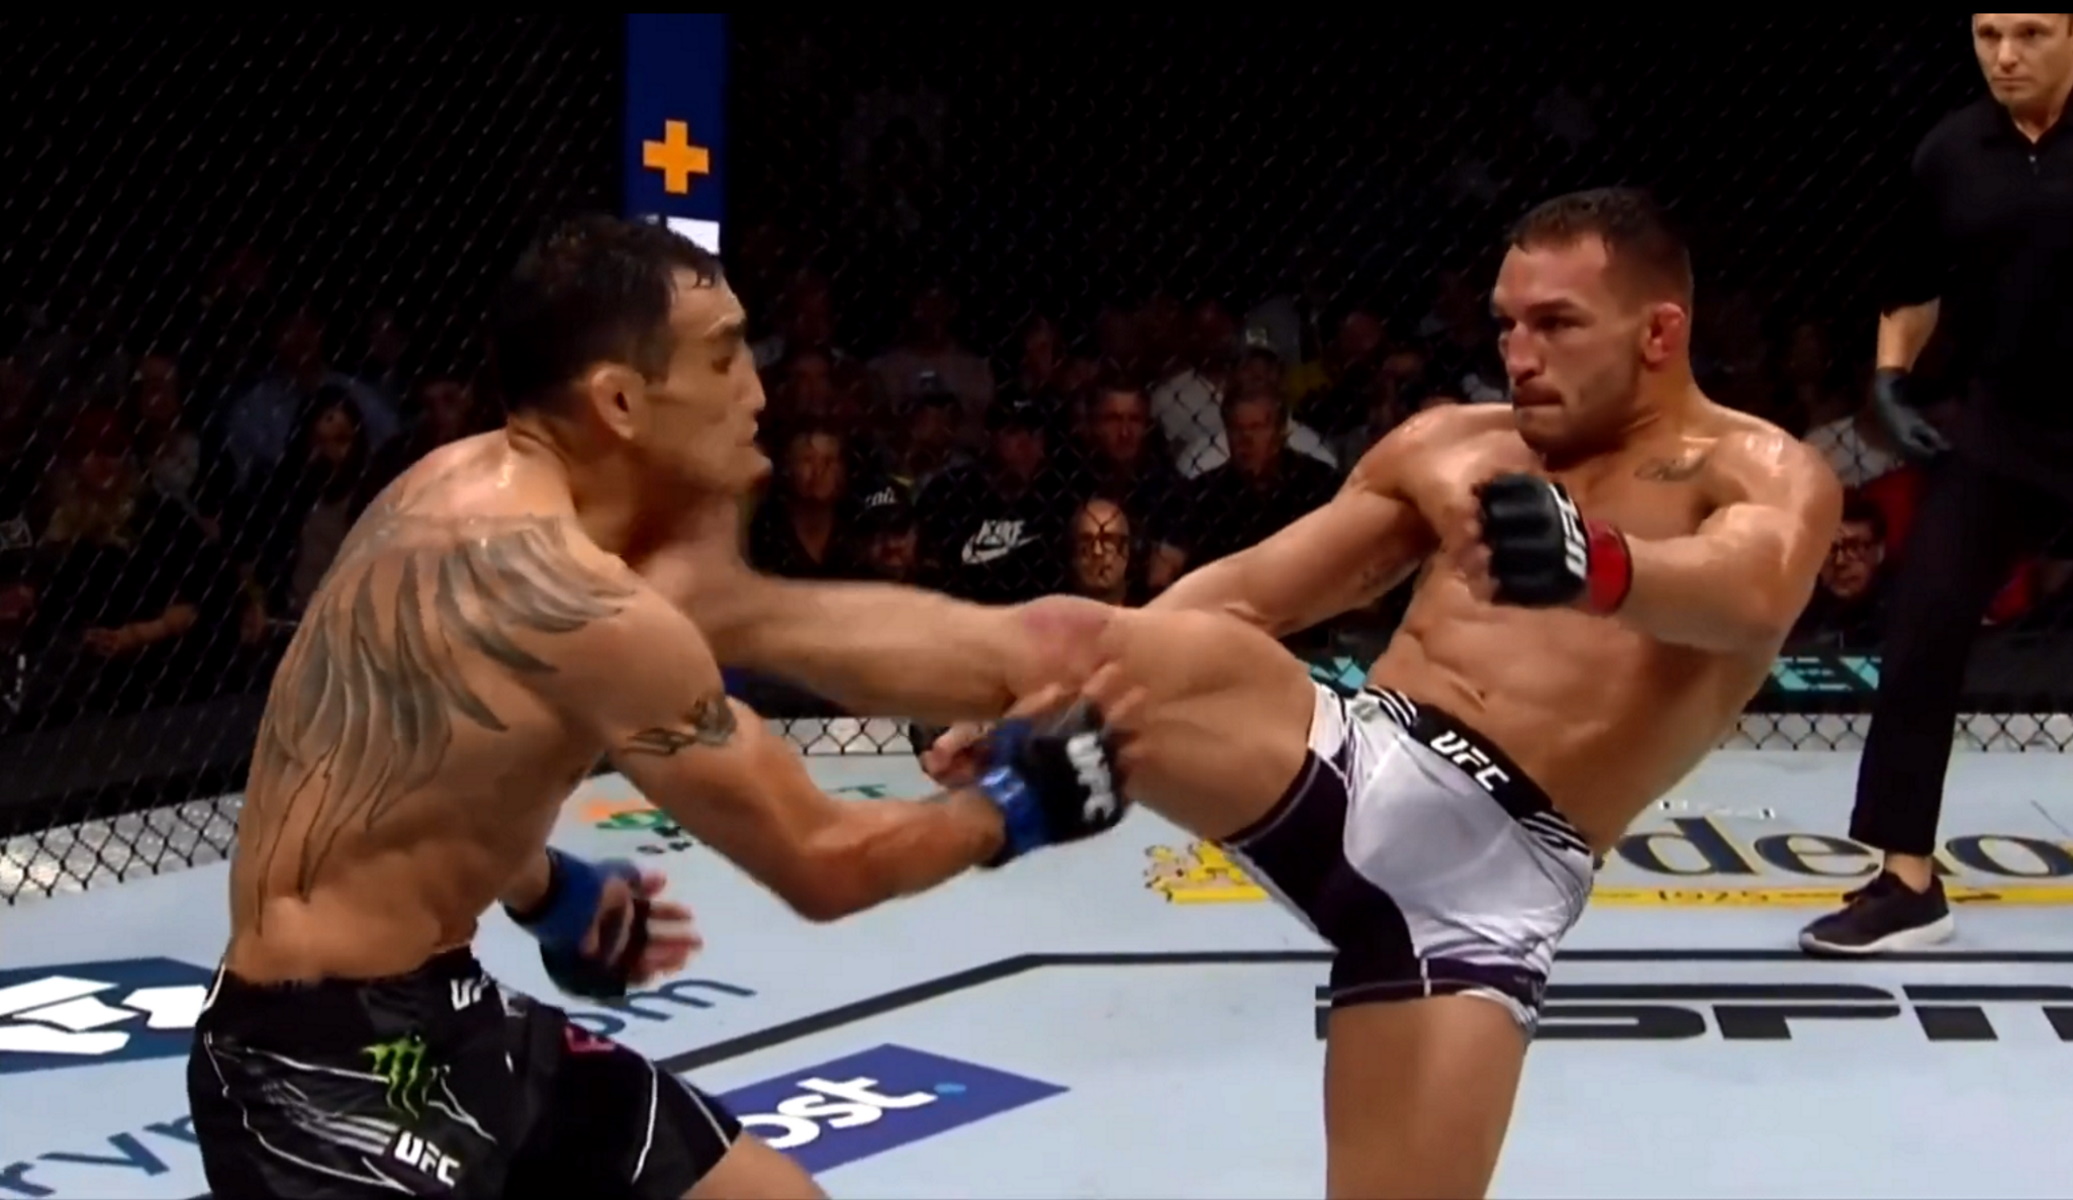 UFC: Του παραμόρφωσε το πρόσωπο με κλωτσιά και τον έβγαλε νοκ-άουτ